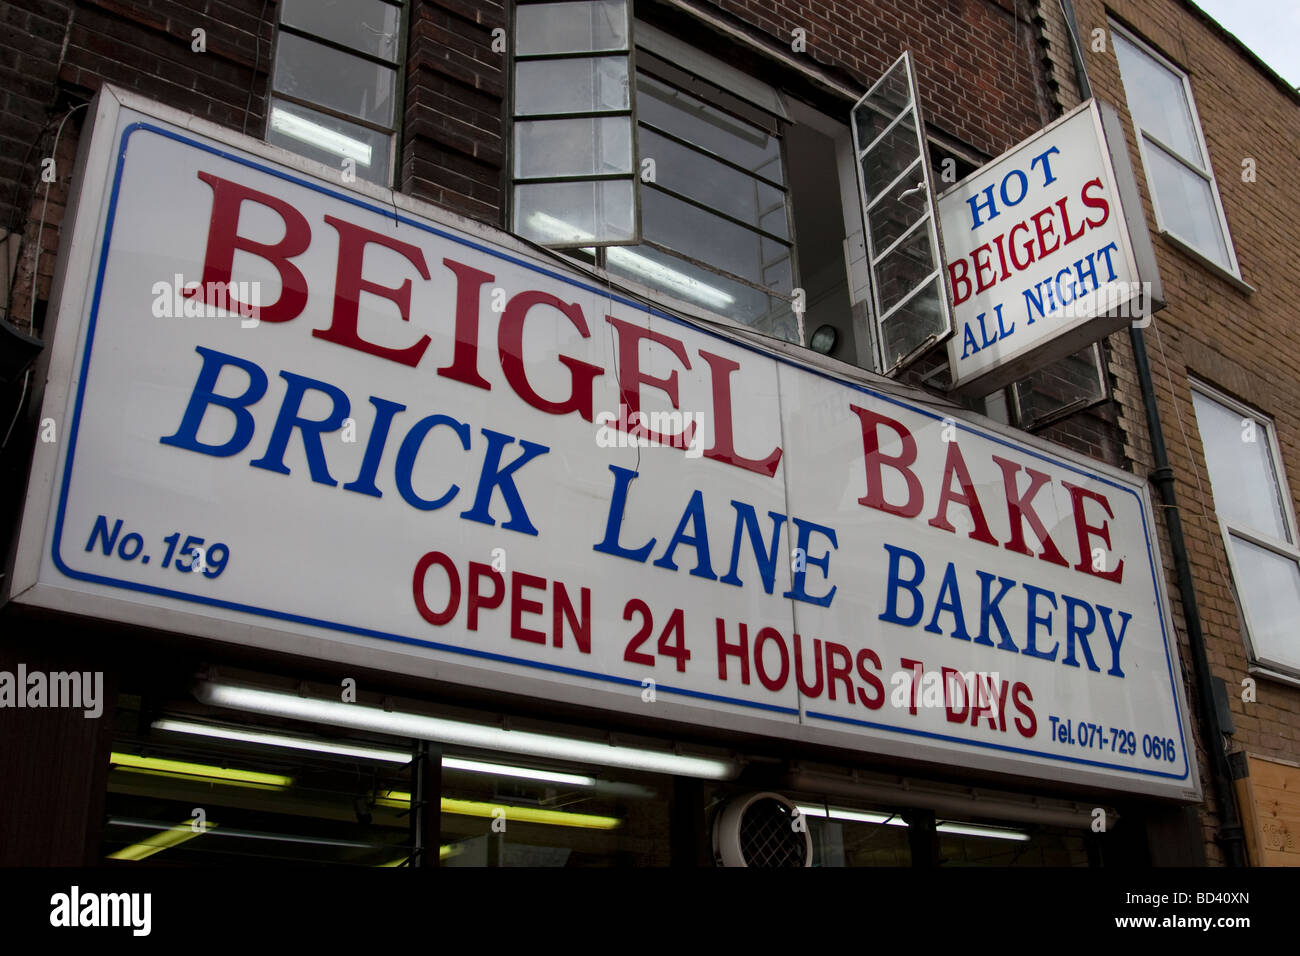 24 hour Beigel bakery on Brick Lane in East London Stock Photo